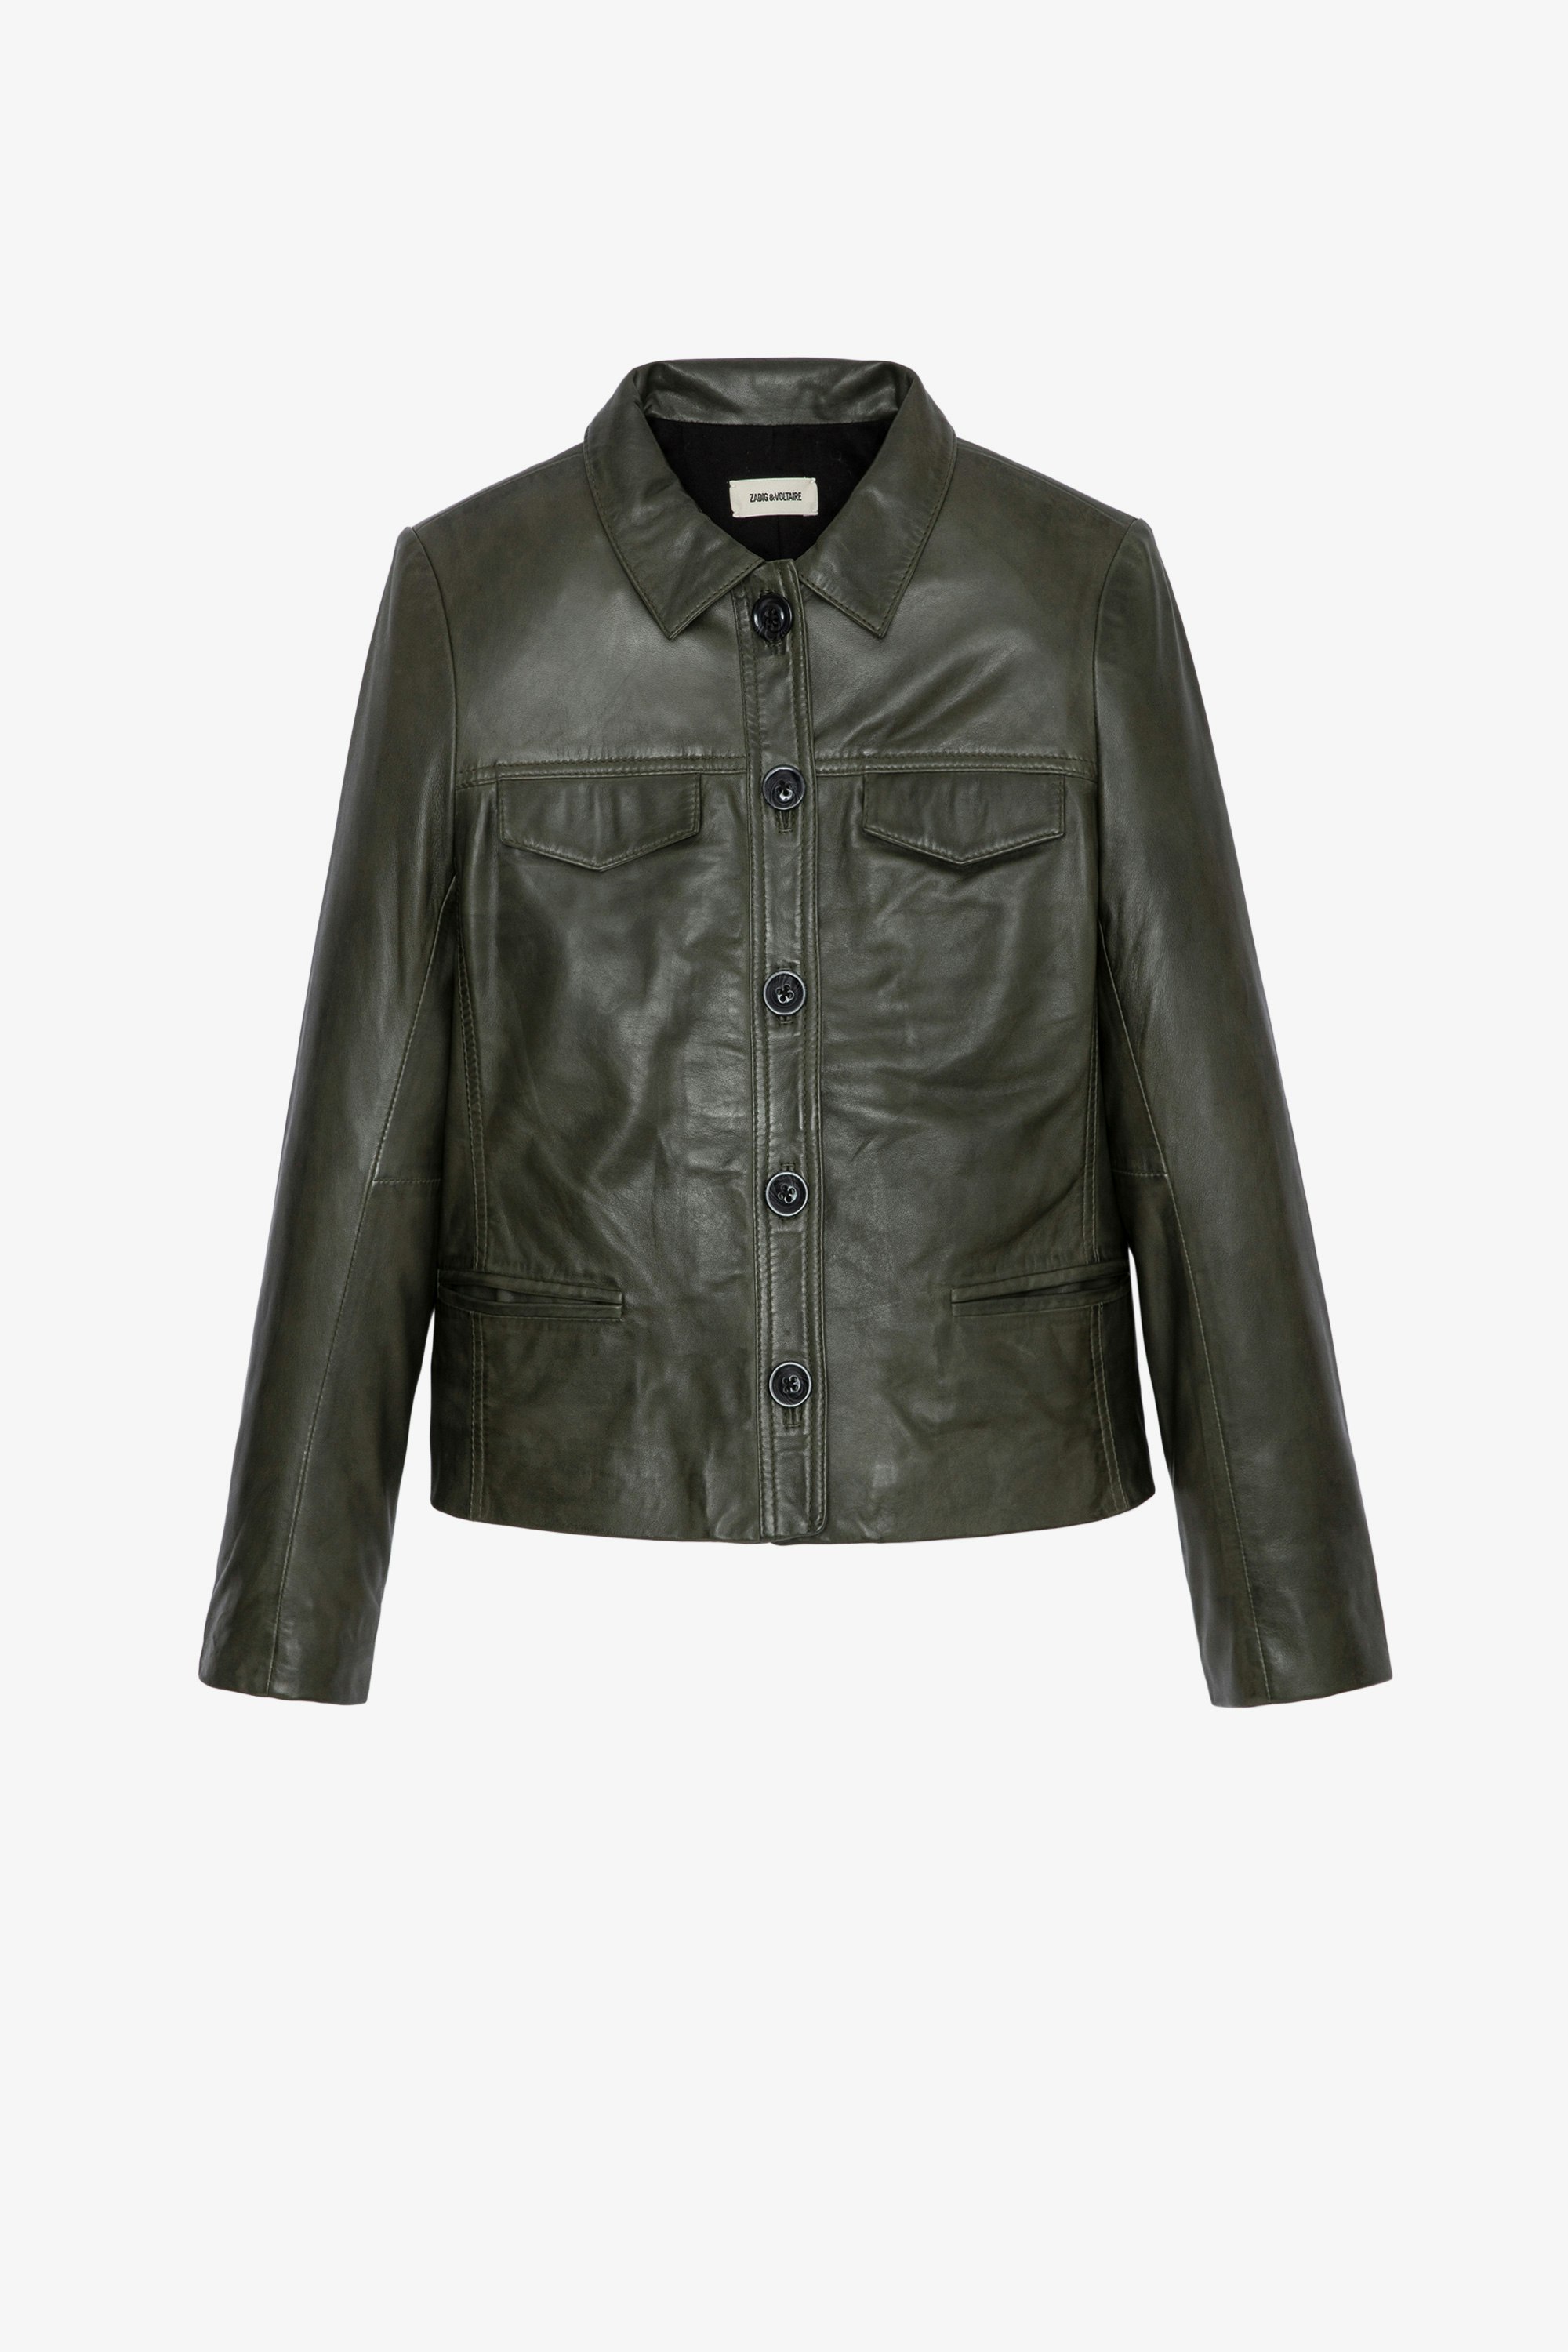 Liam ジャケット Women’s green leather jacket